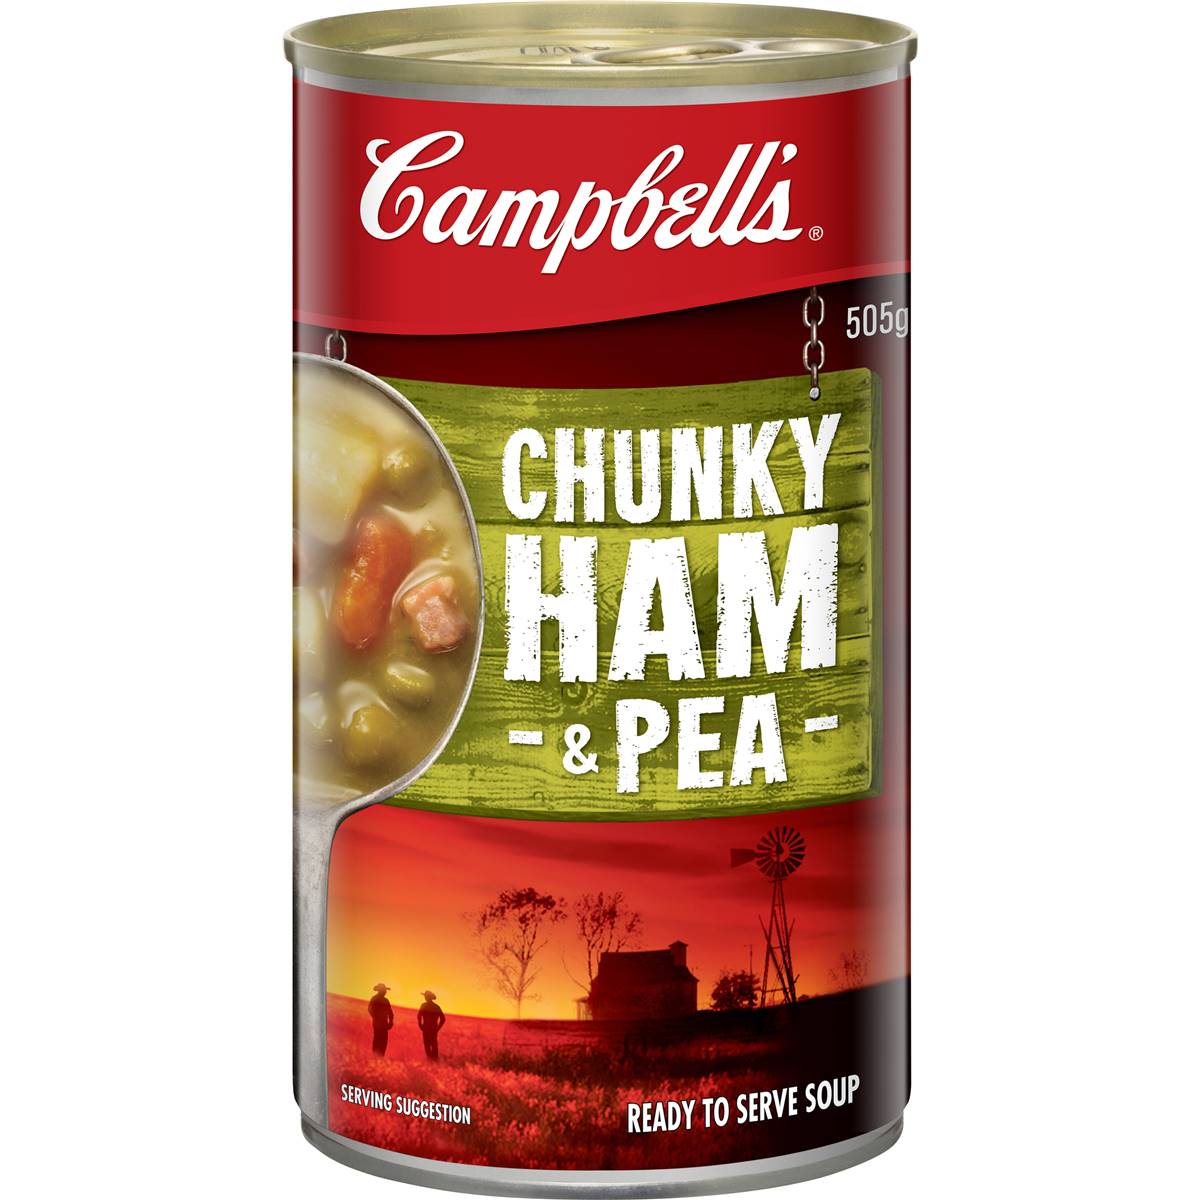 Calories in Campbell's Chunky Ham & Pea Ham & Pea